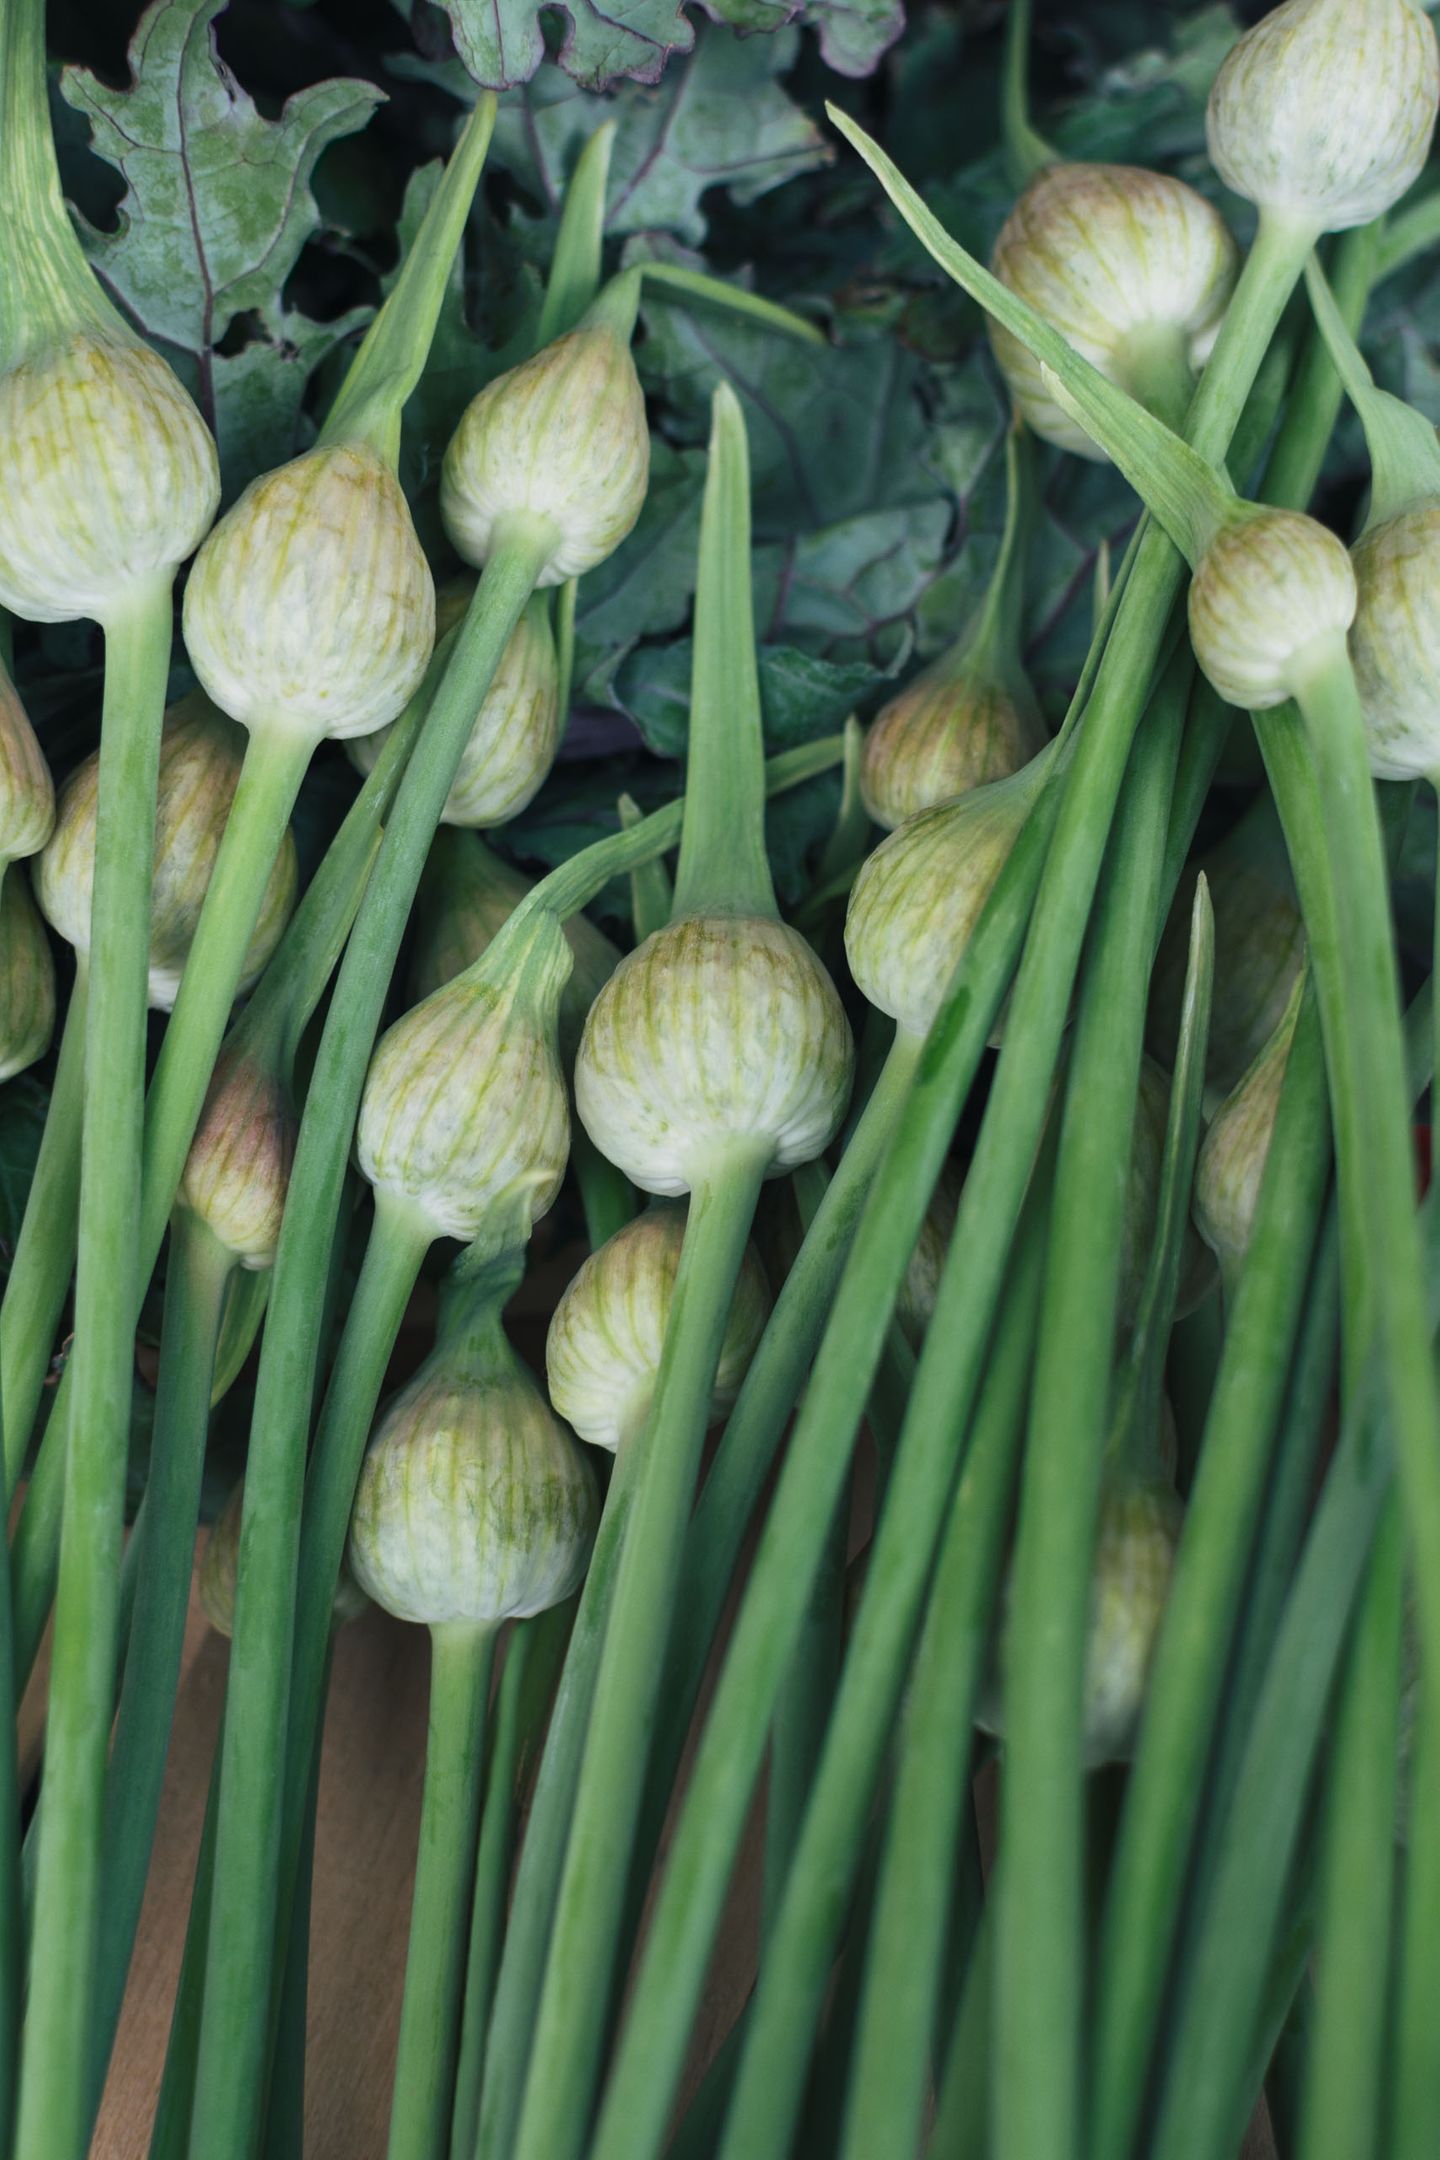 Fresh green garlic scapes still life